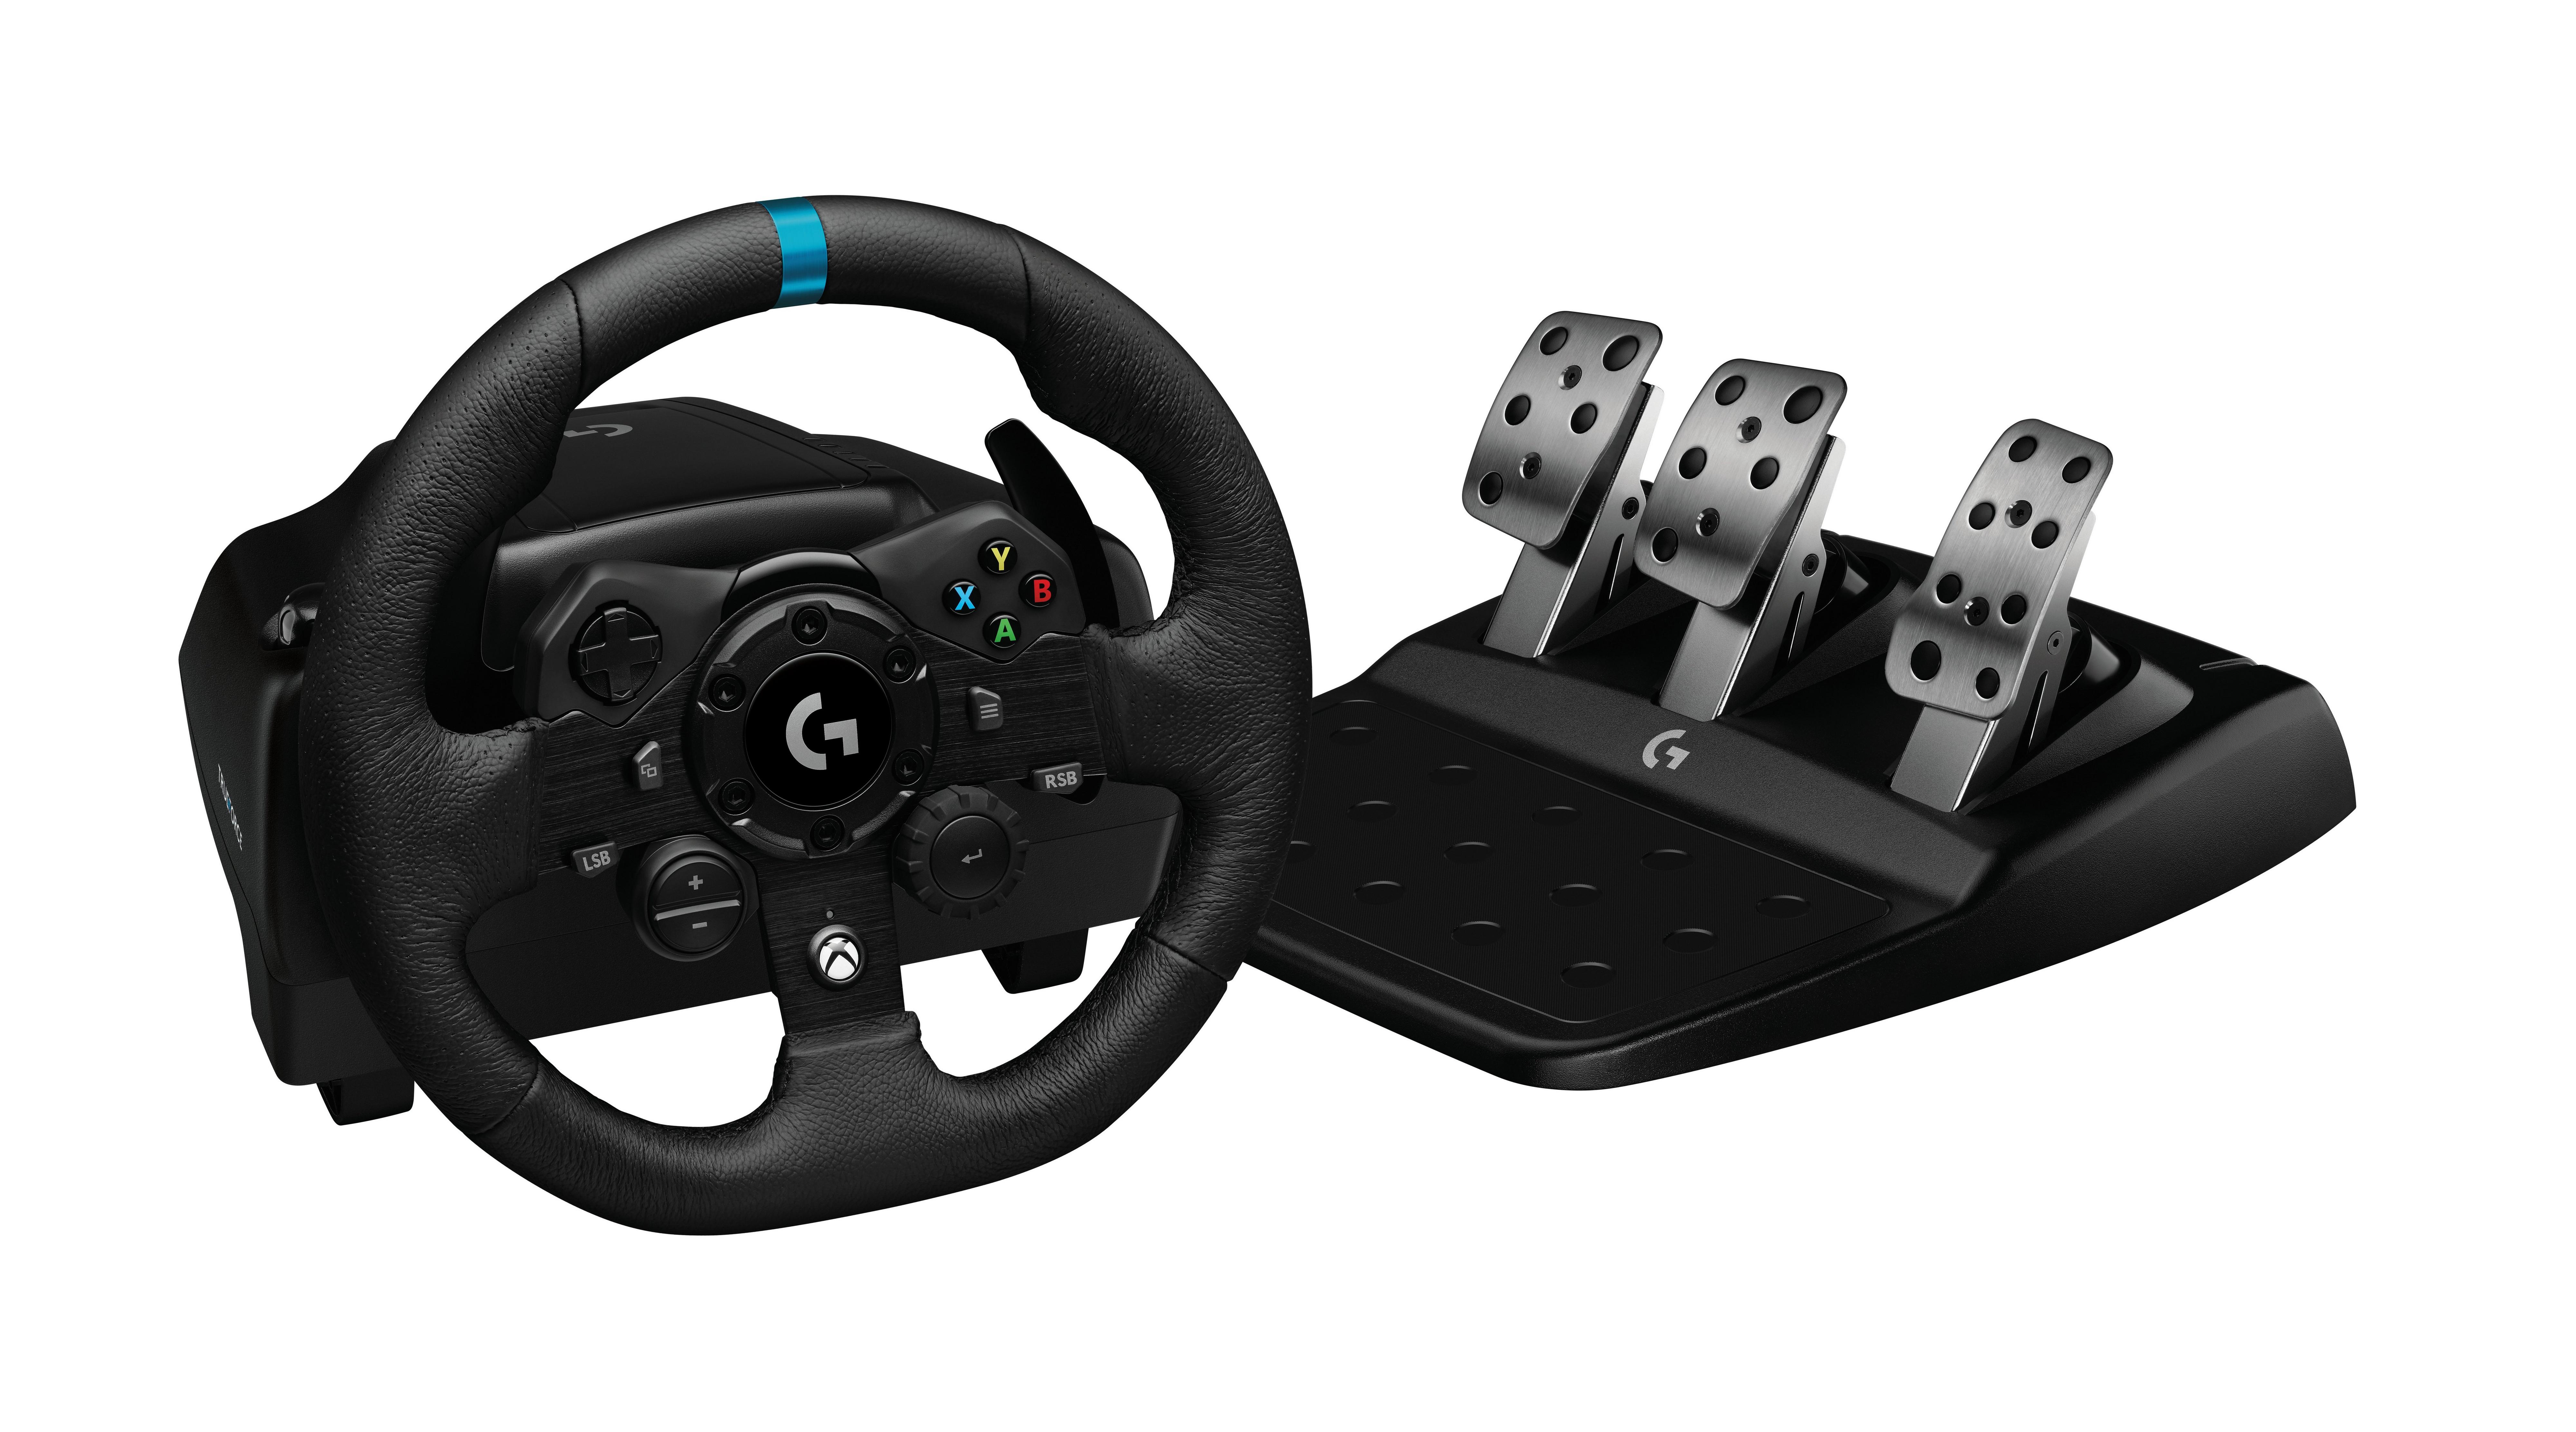 Logitech G923 racing wheel review